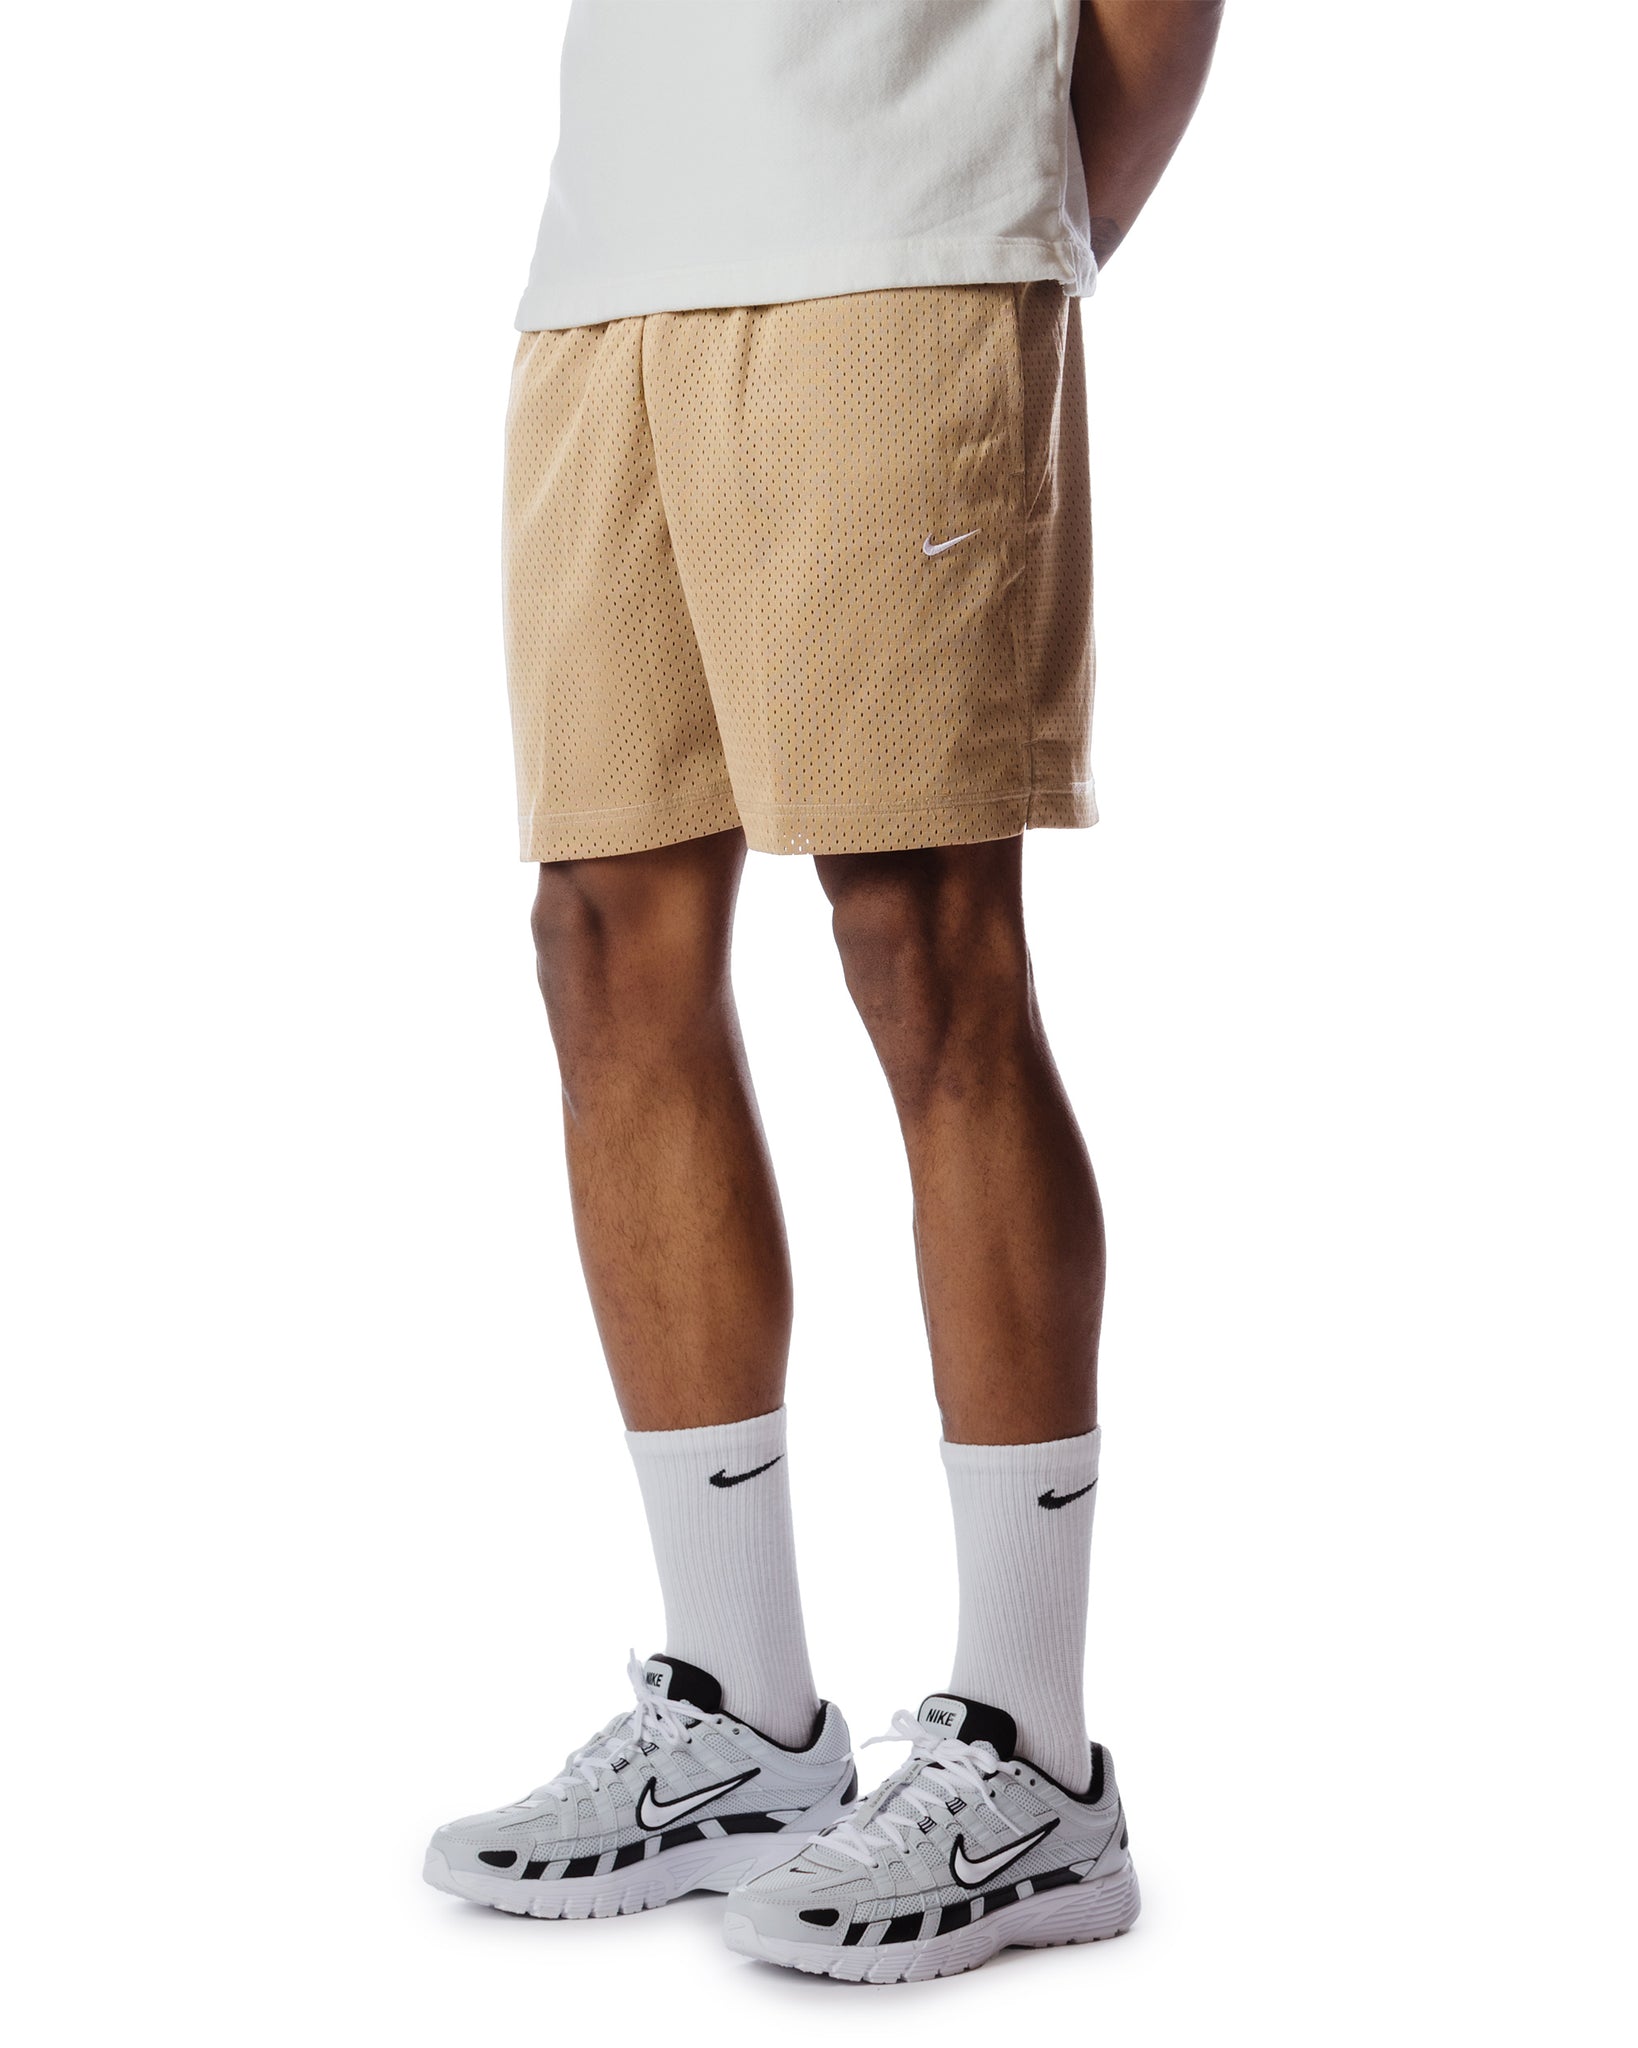 Nike Sportswear Authentics Mesh Shorts Khaki Front